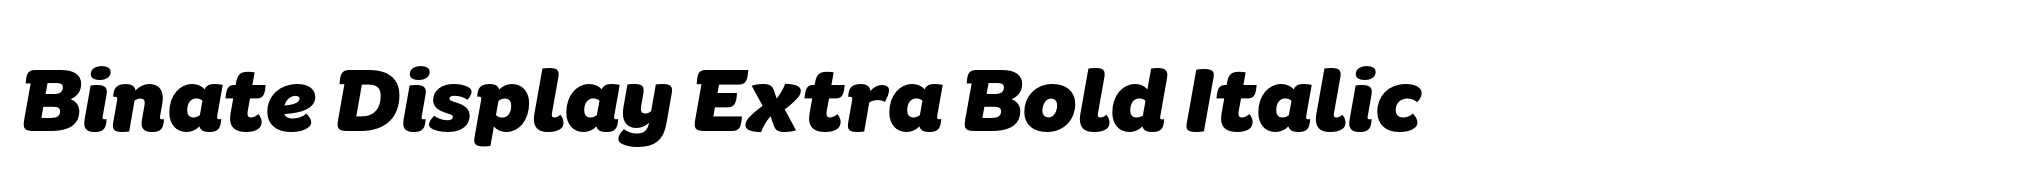 Binate Display Extra Bold Italic image